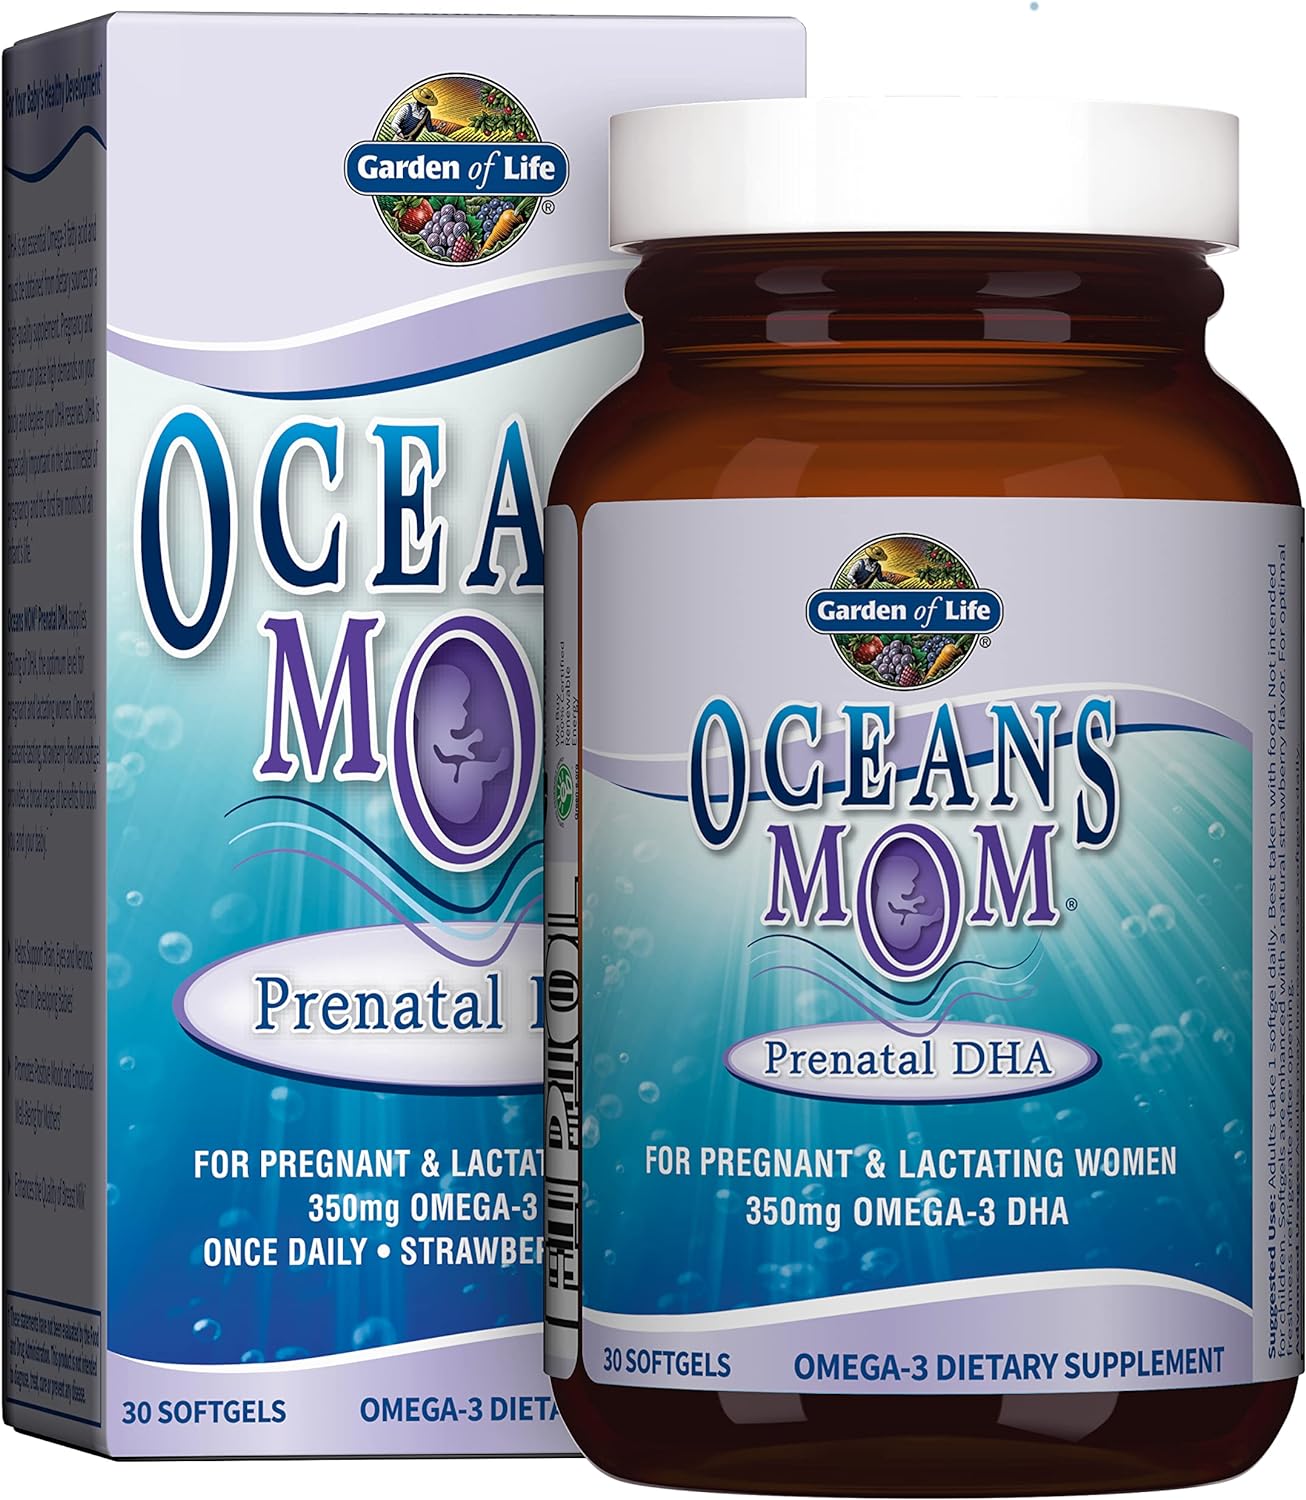 Garden of Life Oceans Mom Prenatal Fish Oil DHA, Omega 3 Fish Oil Supplement - Strawberry, 350mg Prenatal DHA Pregnancy Fish Oil Support for Mamas, Babys Brain  Eye Development, 30 Small Softgels